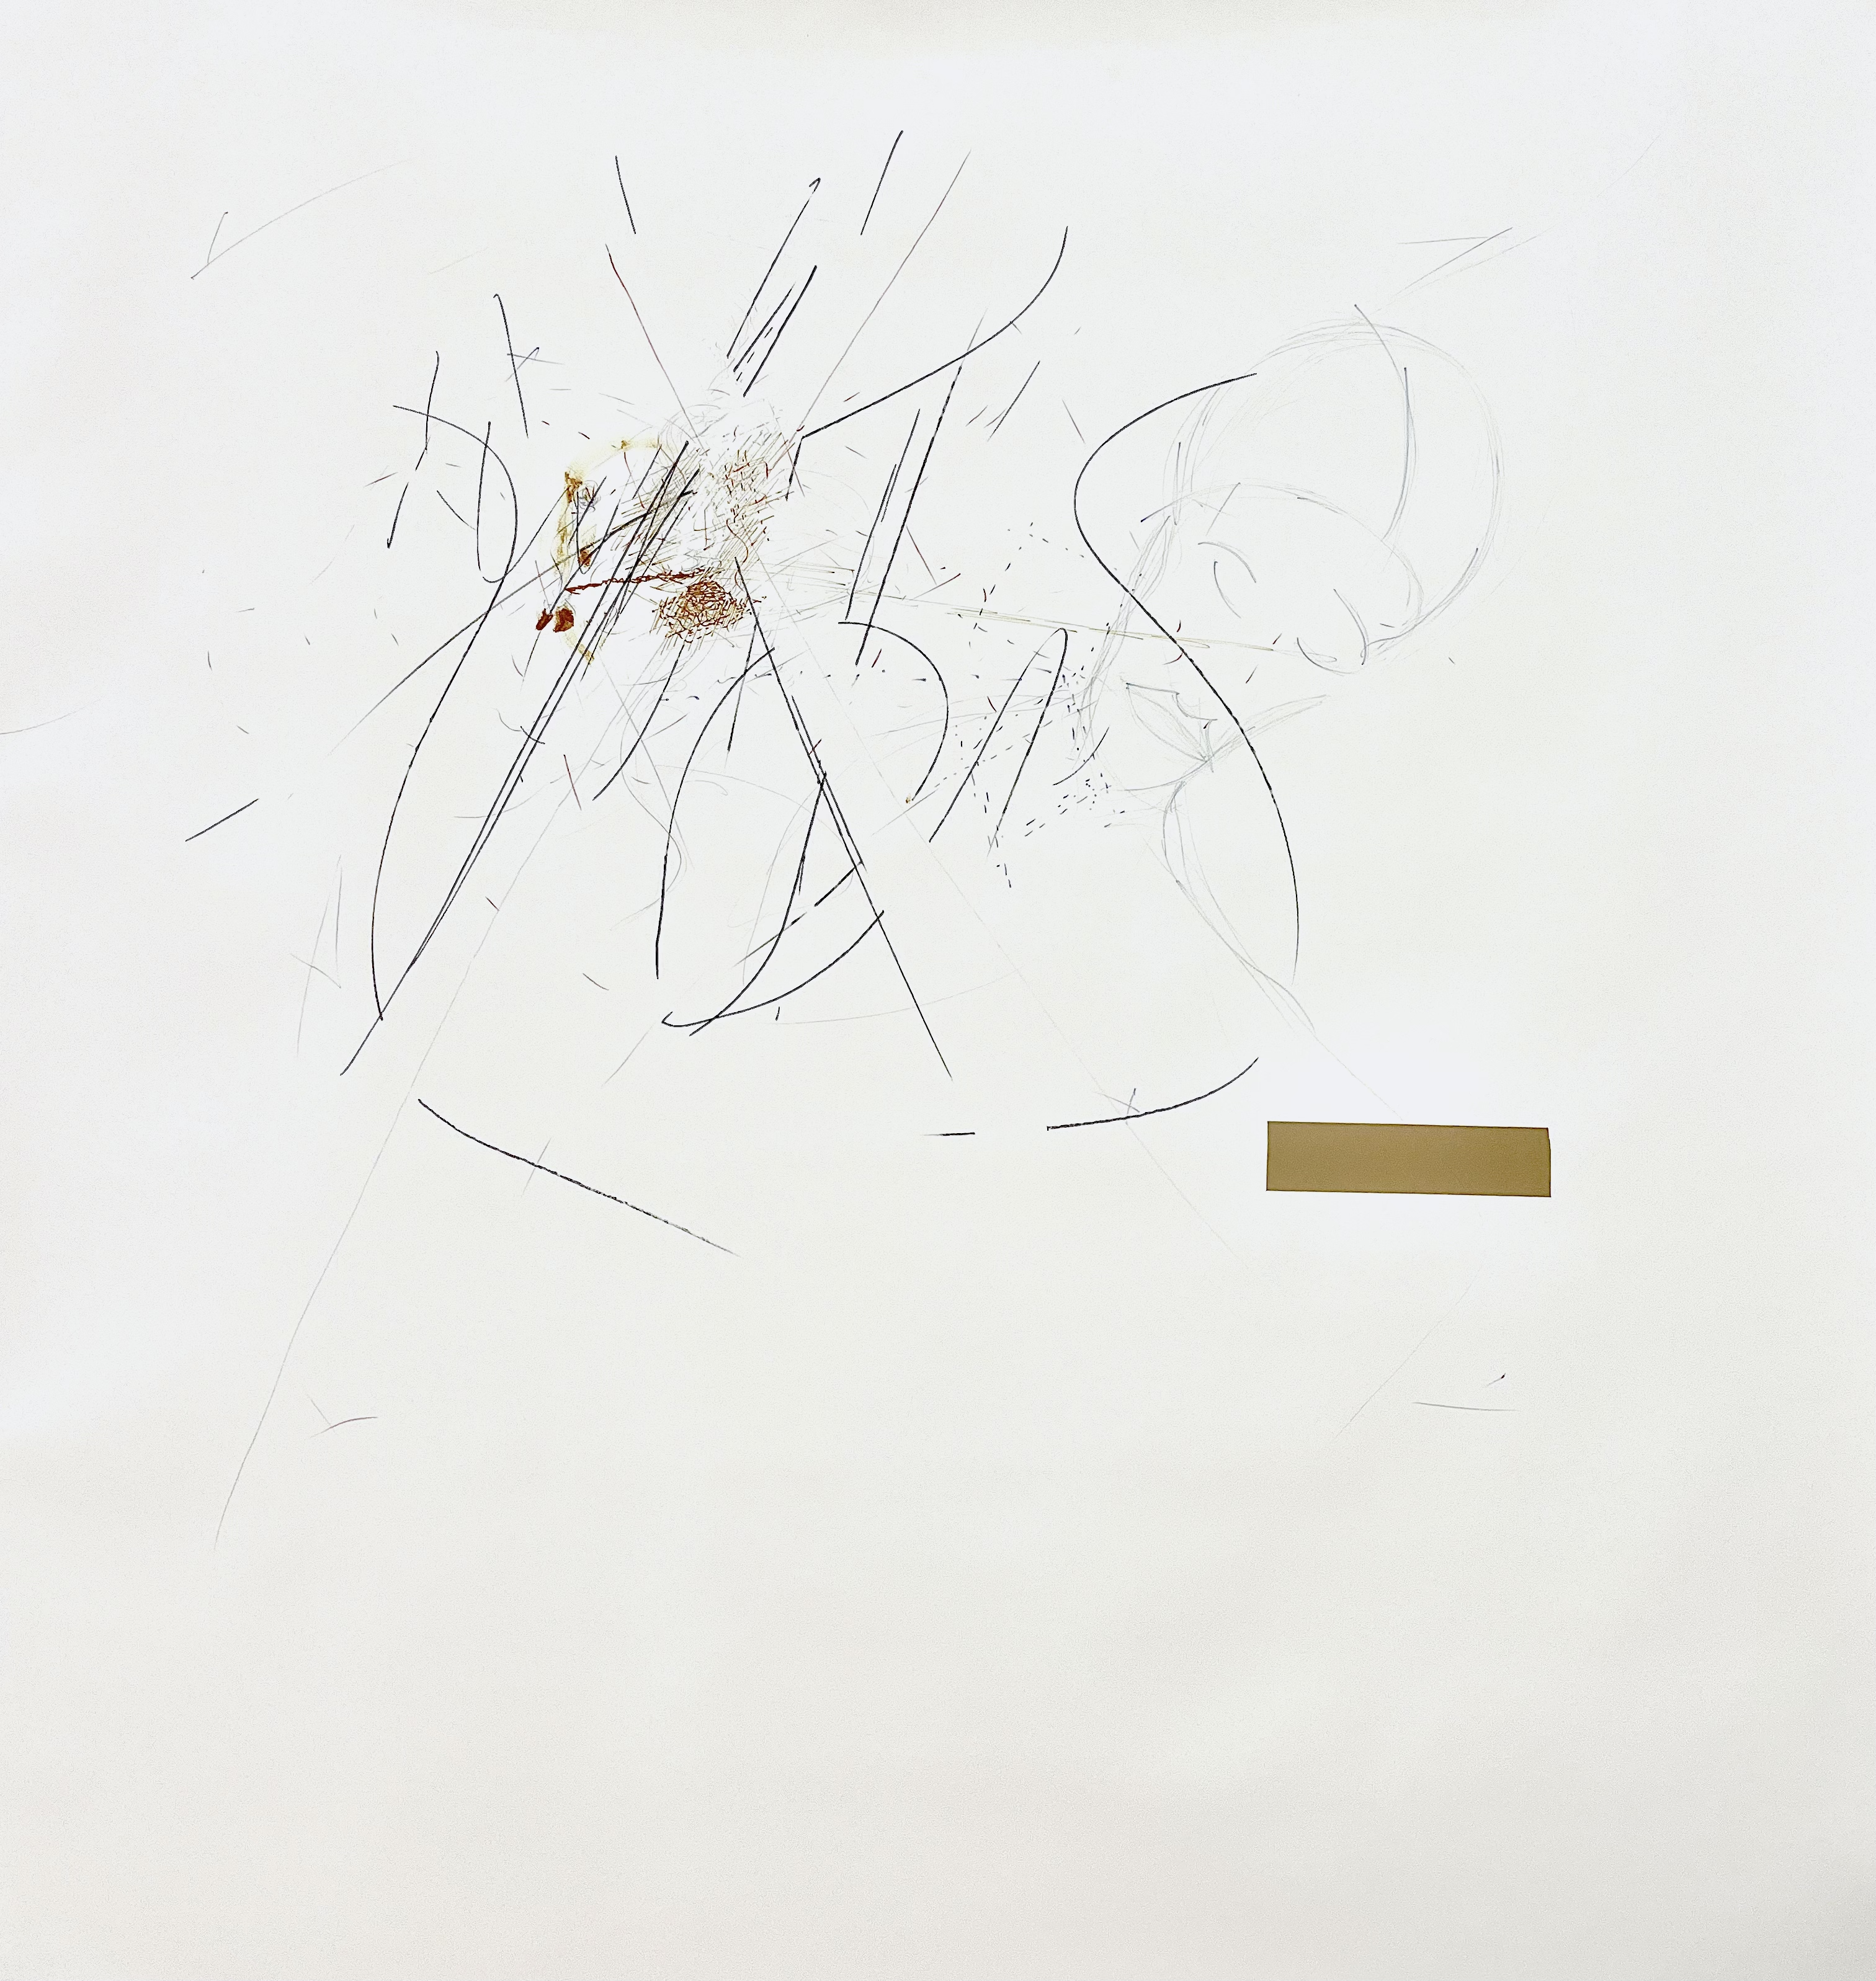 petit déjeunerVeronika Wenger 2021 160 x 150 cm, marker, tape, pencil on paper